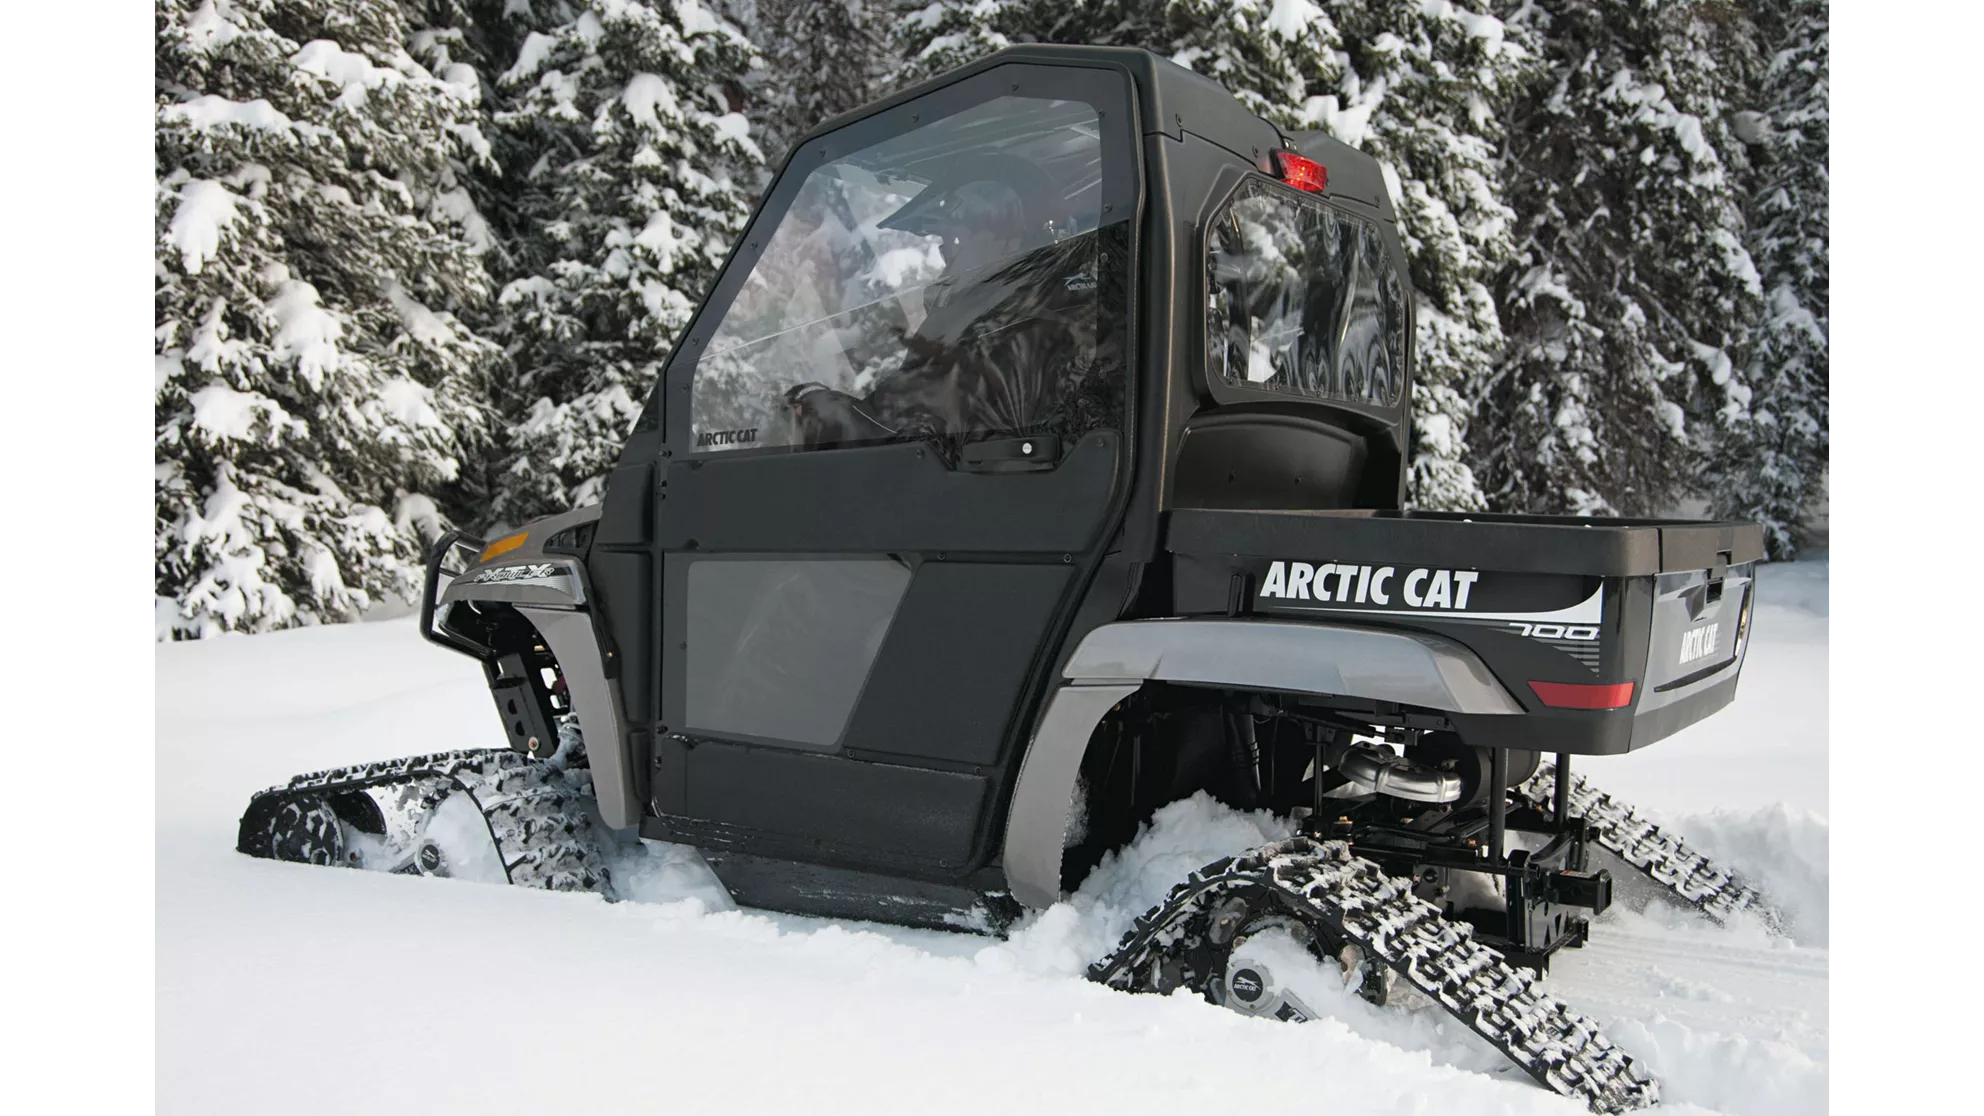 Arctic Cat Prowler 1000i - Immagine 5